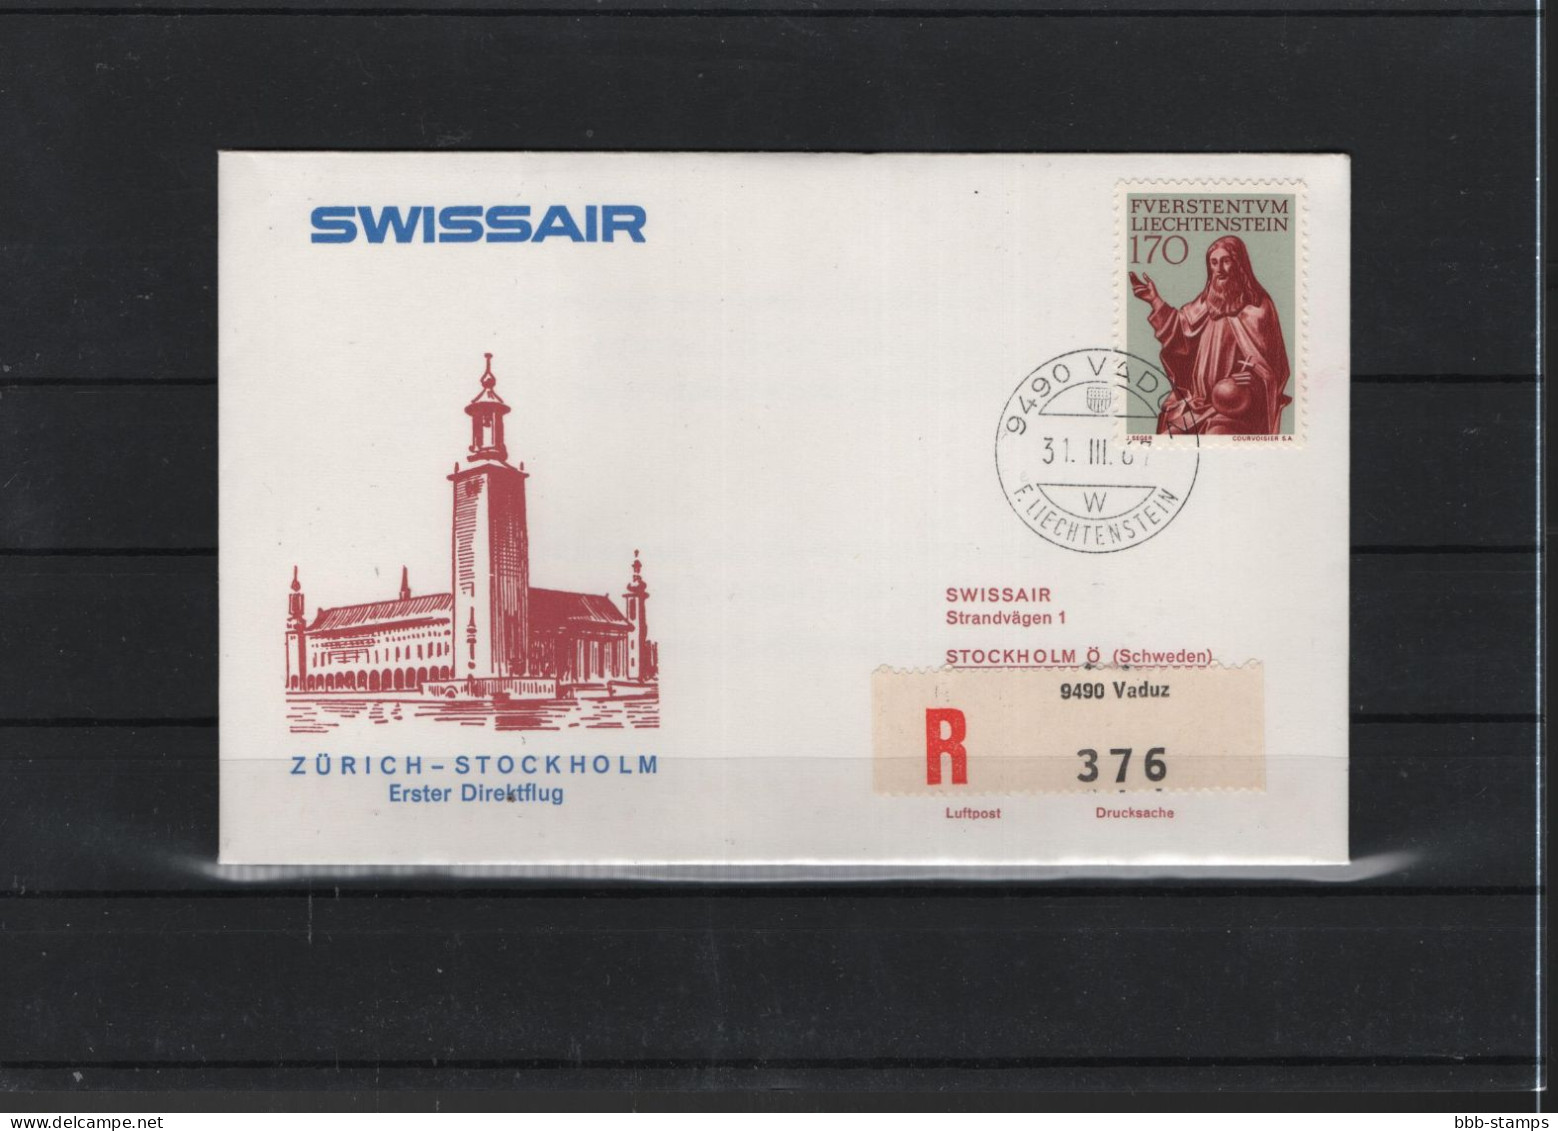 Schweiz Air Mail Swissair  FFC  31.3.1967 Zürich - Stockholm - First Flight Covers